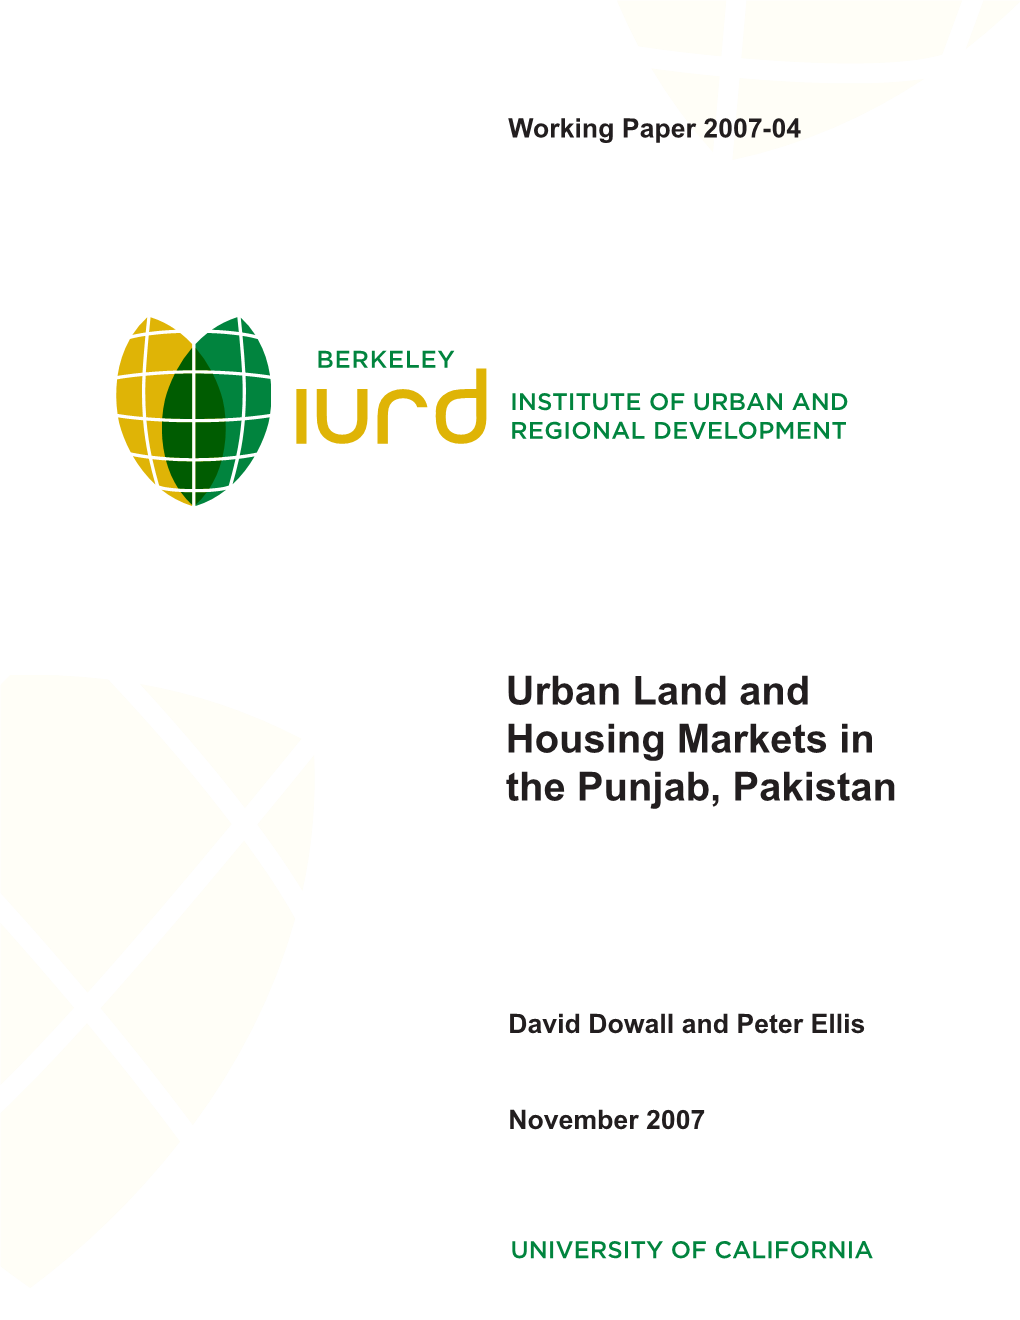 Urban Land and Housing Markets in the Punjab, Pakistan